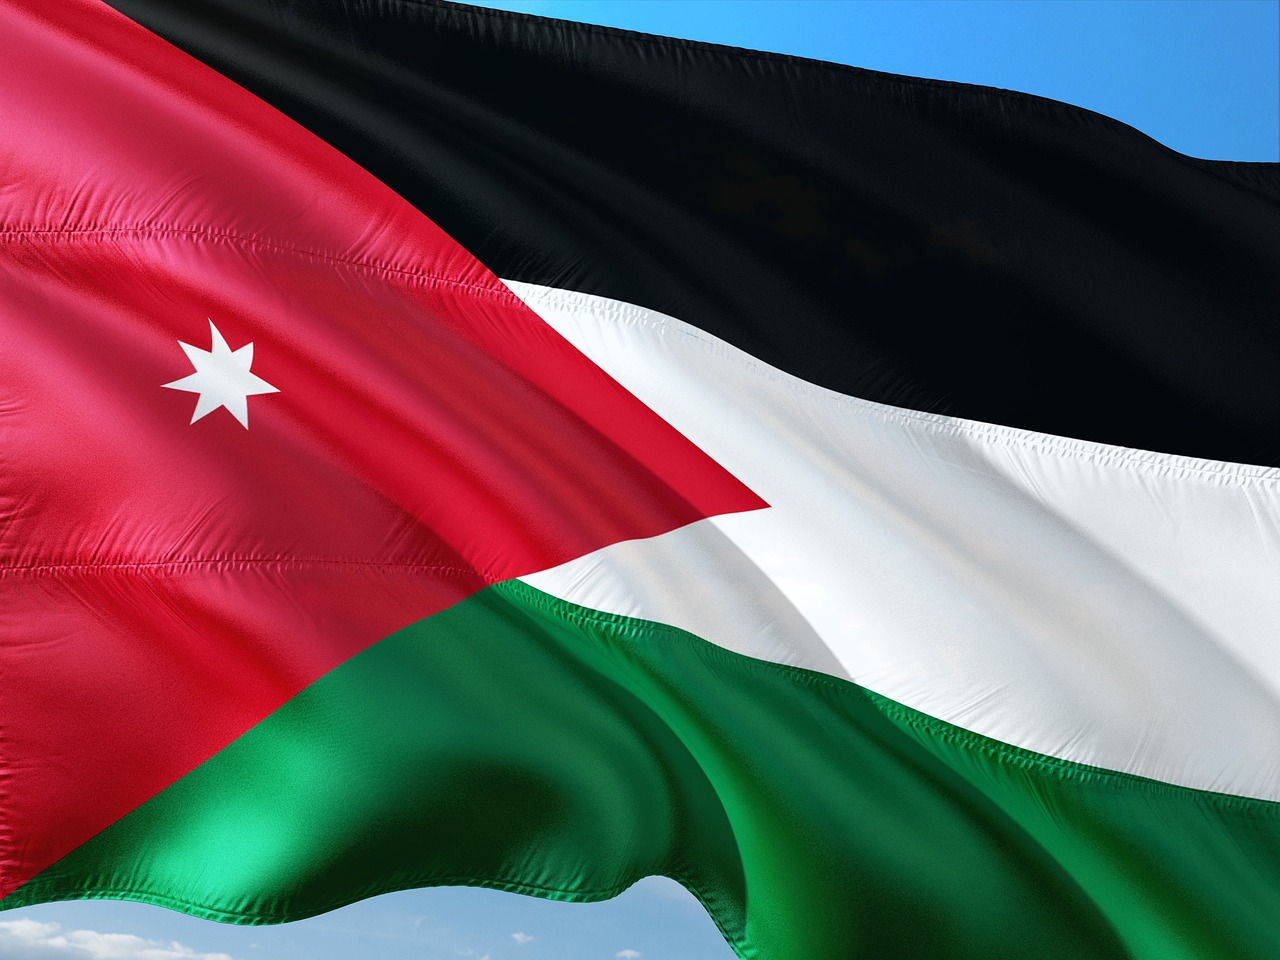 the flag of jordan flies high in the sky, a digital rendering, inspired by Julia Pishtar, shutterstock, hurufiyya, closeup portrait shot, 1128x191 resolution, red green white black, shabab alizadeh